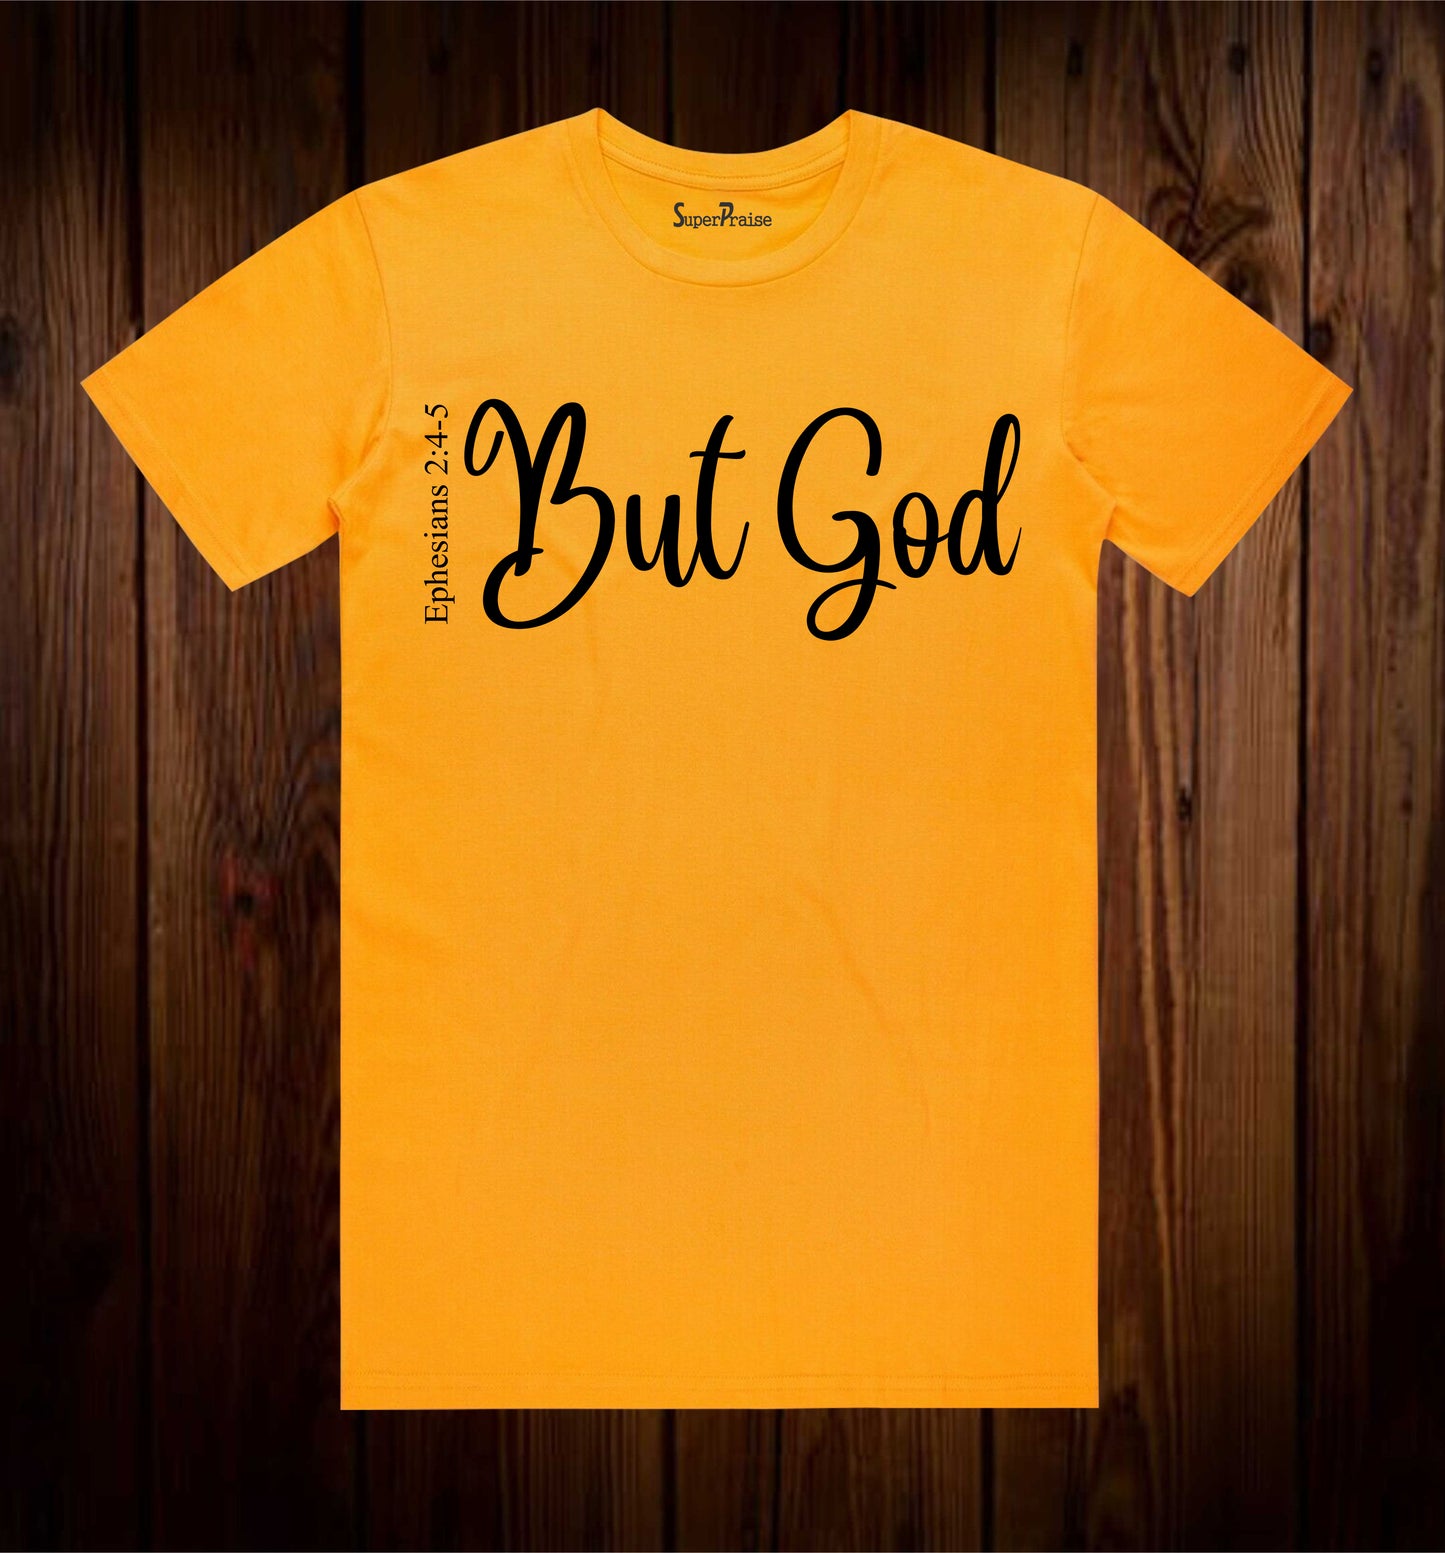 But God Ephesians 2:4-5 Verse T Shirt